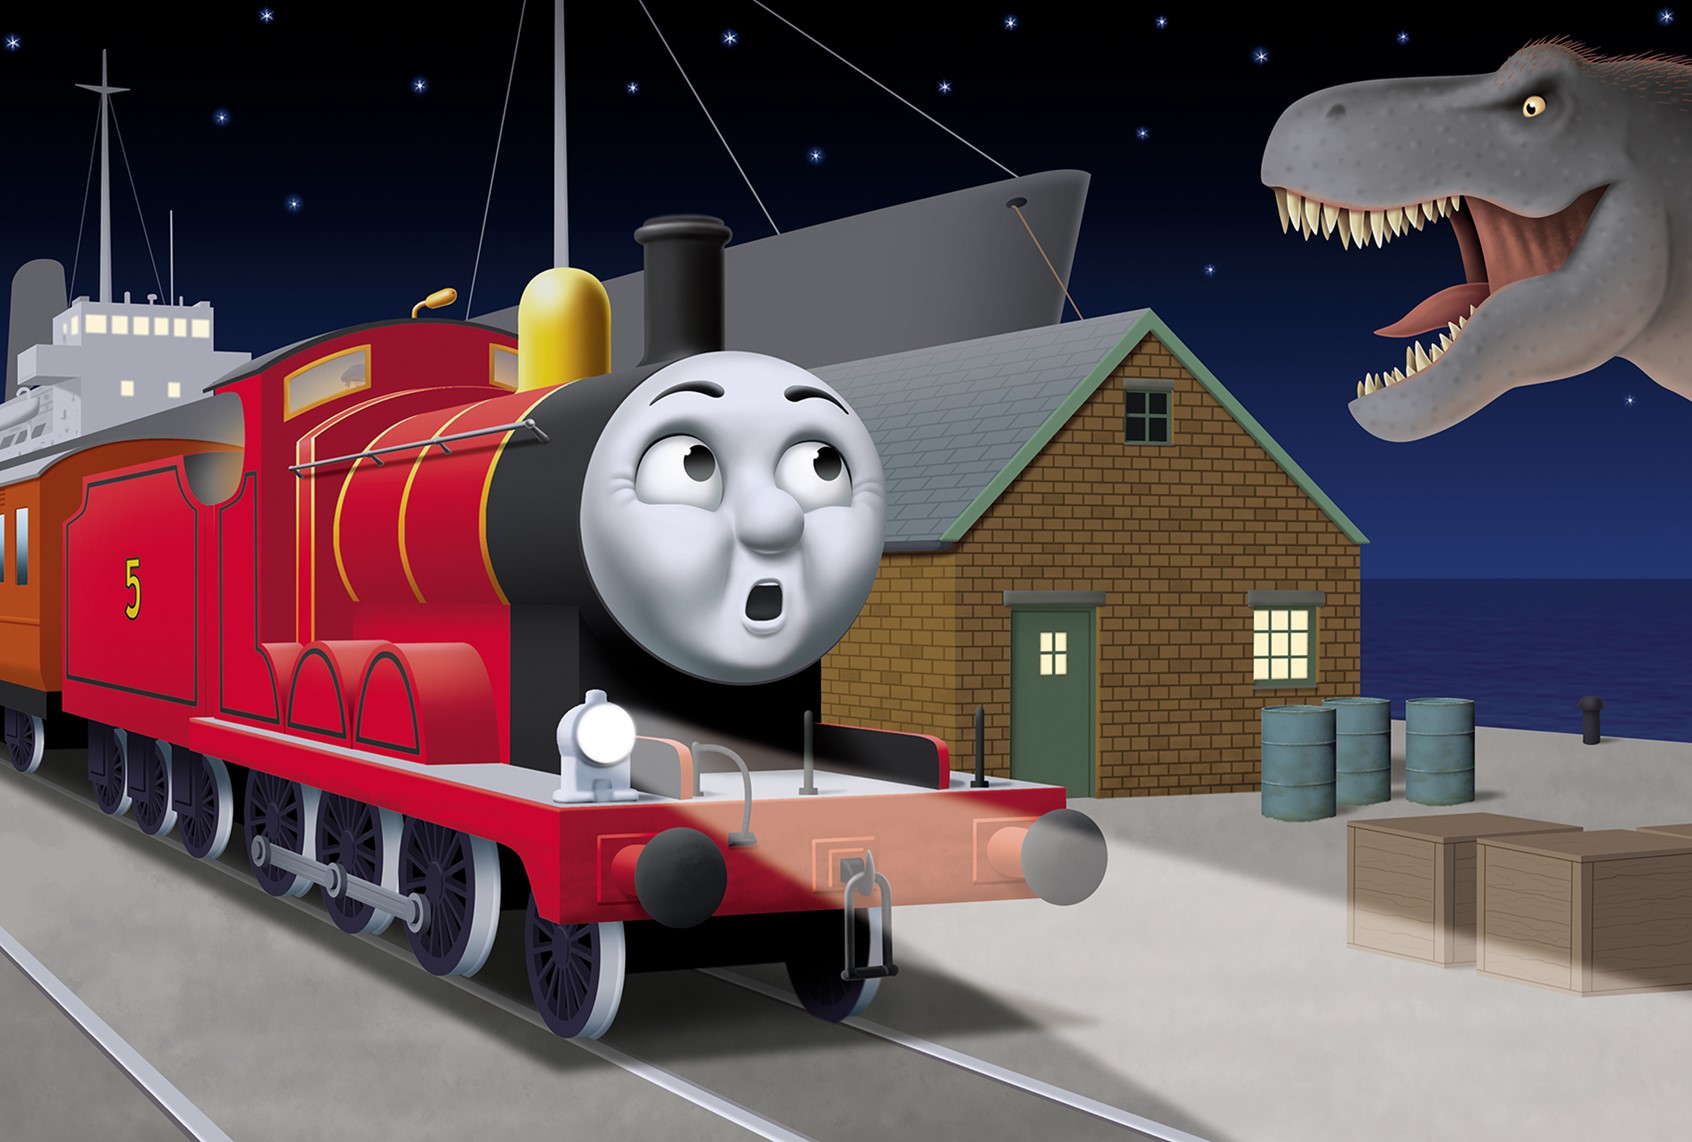 Robin Davies illustration of Thomas the train